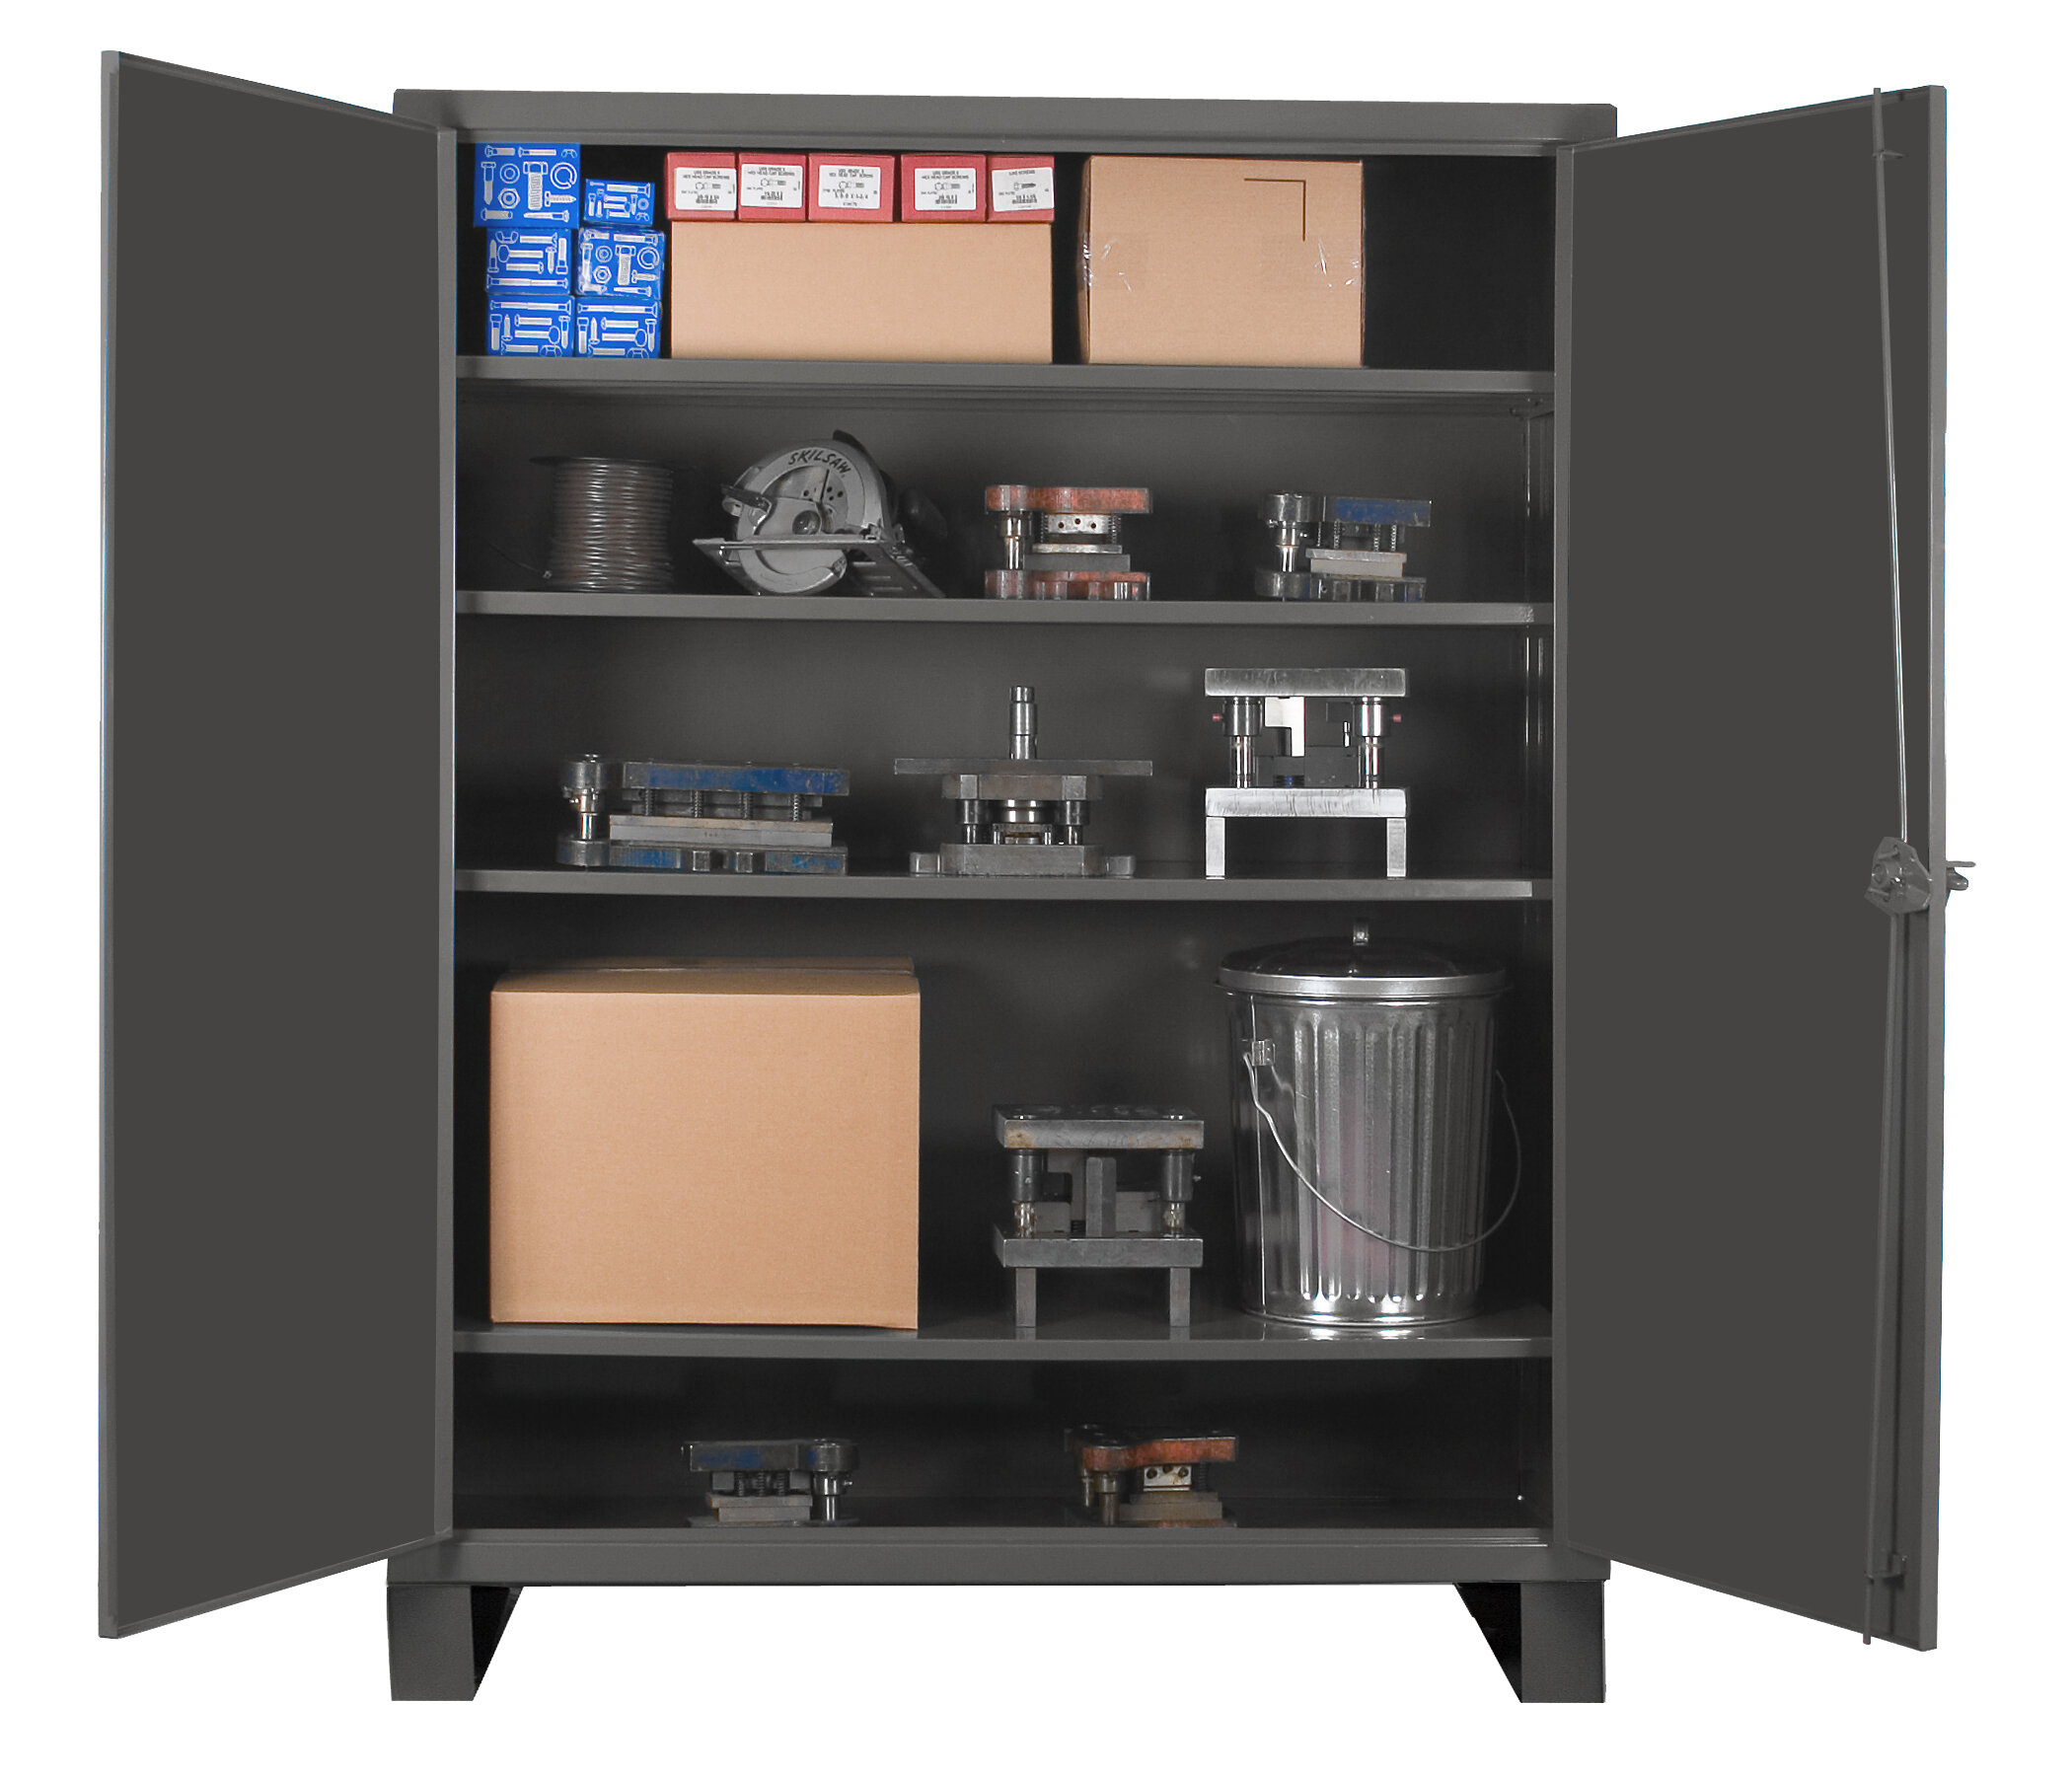 Durham Heavy Duty Double Shift Storage Cabinet HDDS243678-8S95 - 12 Gauge 36W x 24D x 78H